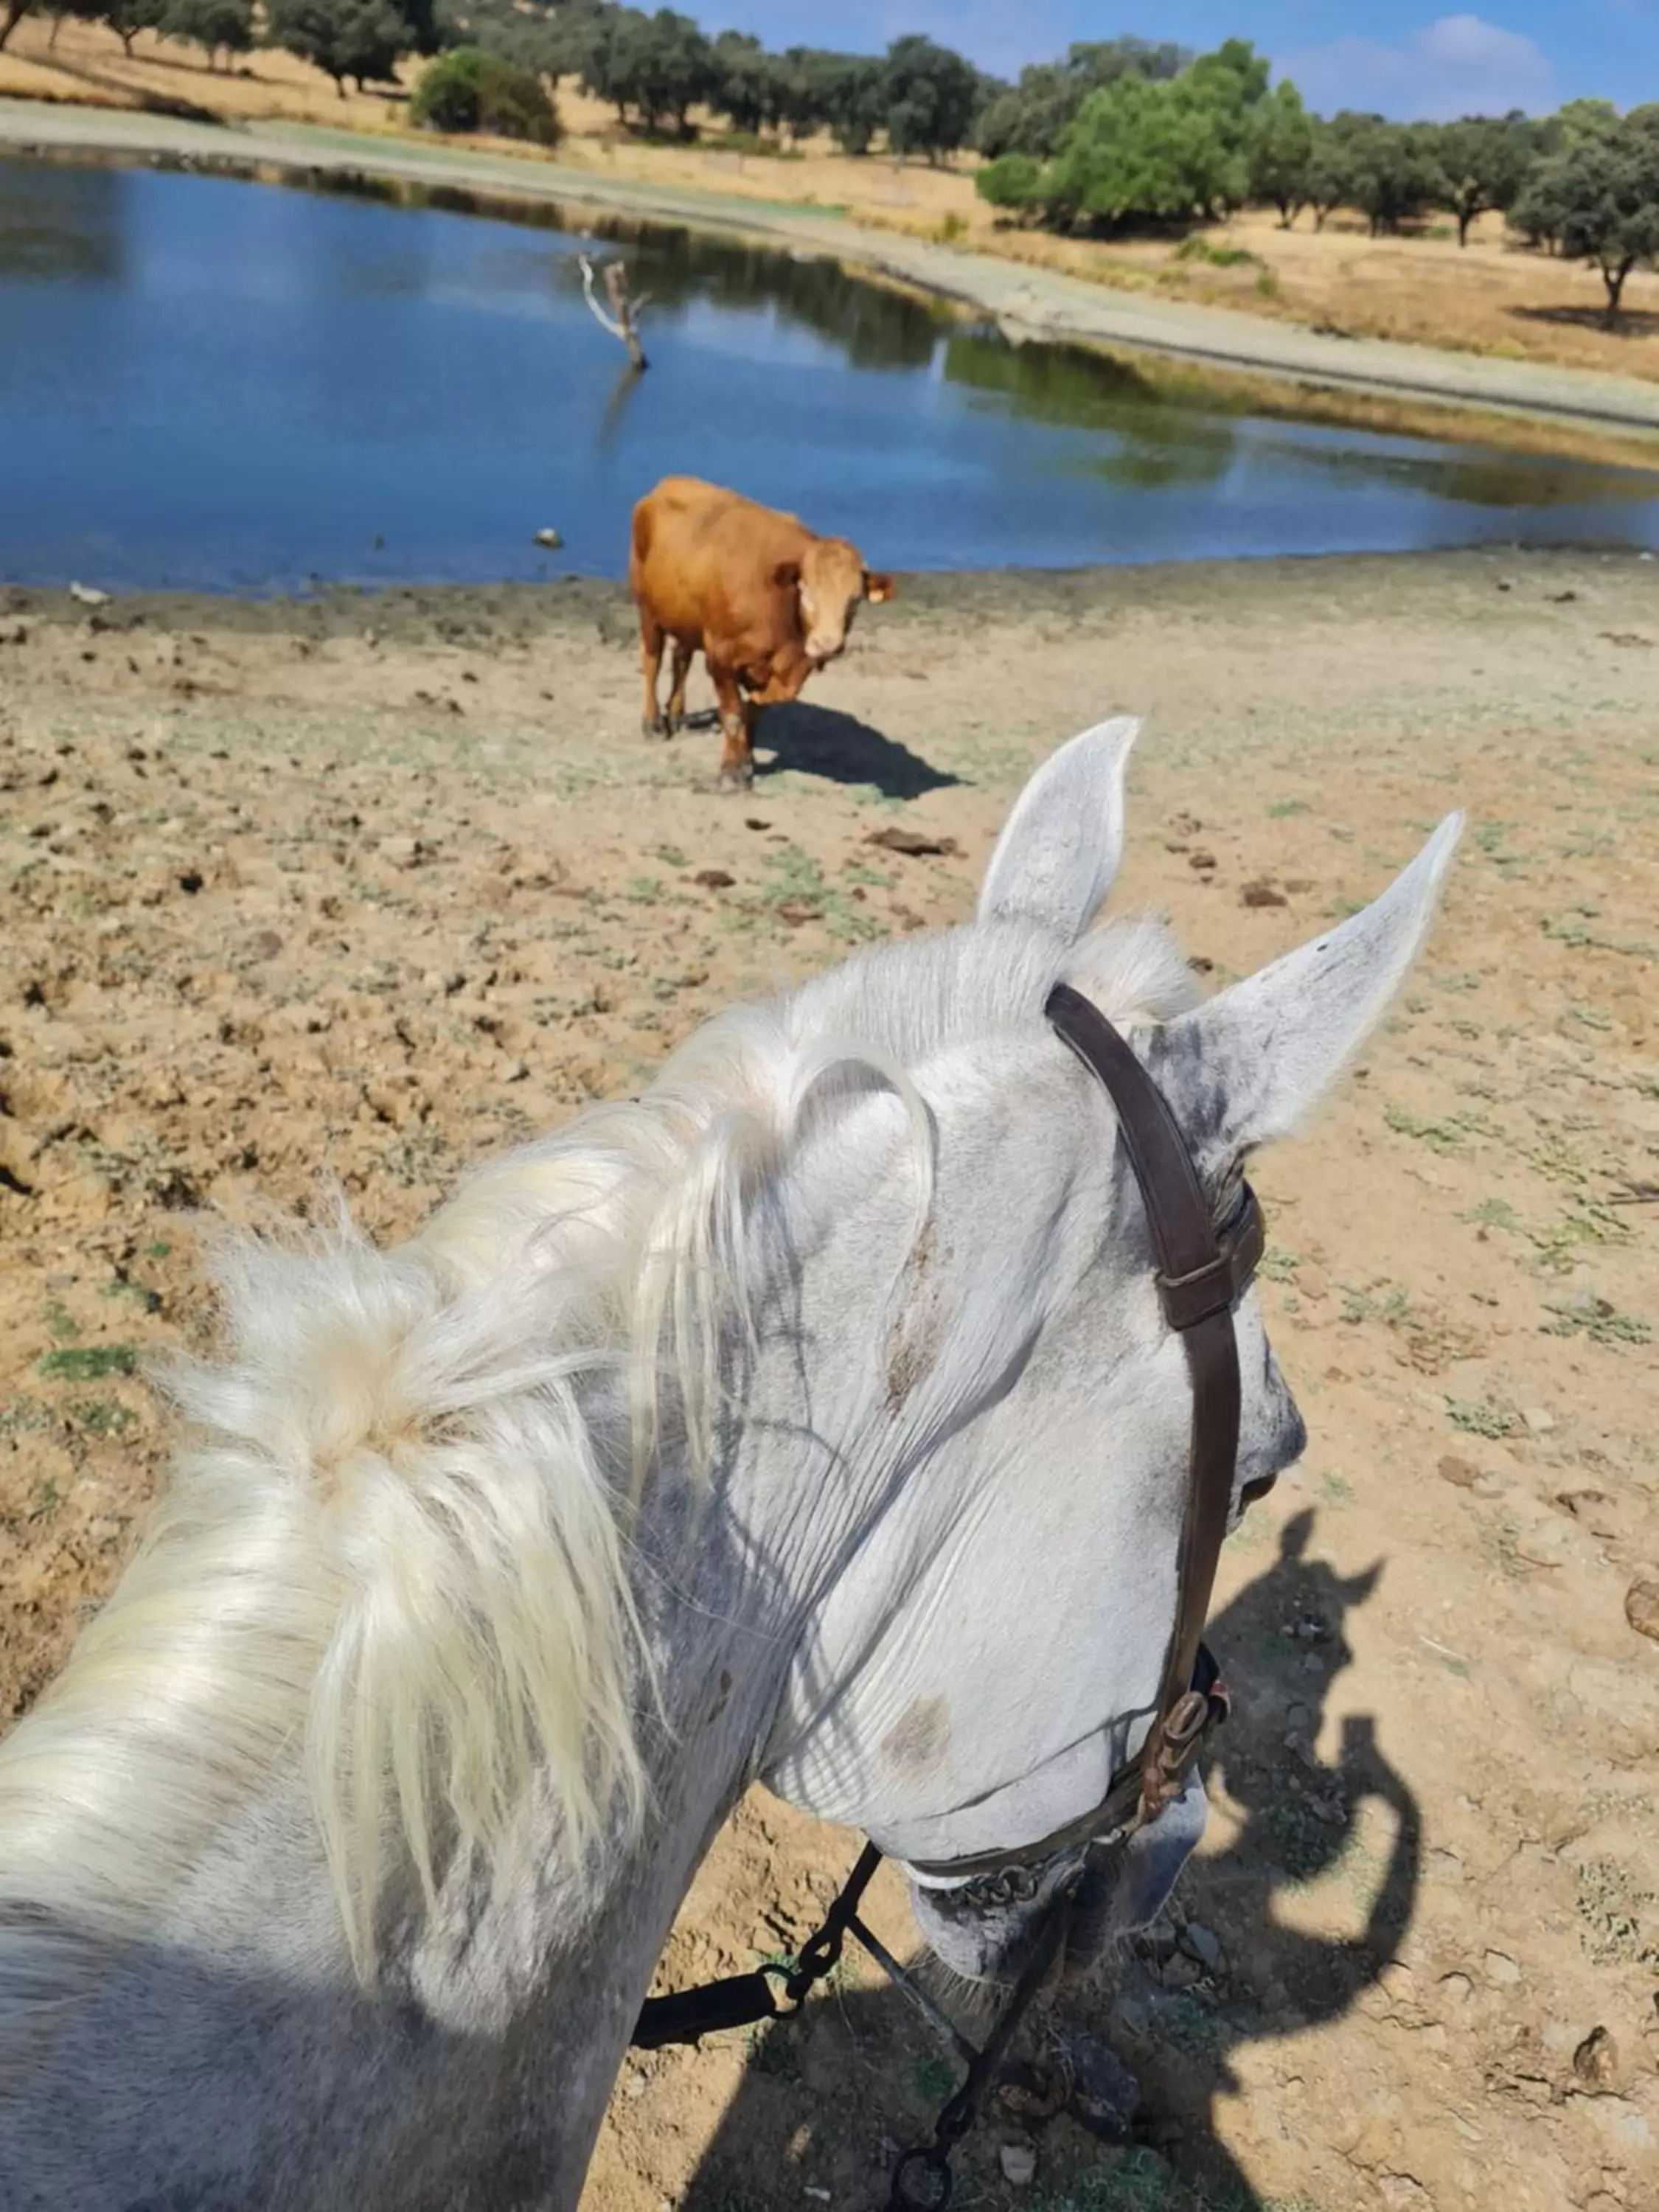 Horse-riding, Other Animals in Alojamiento Rural Finca Barral